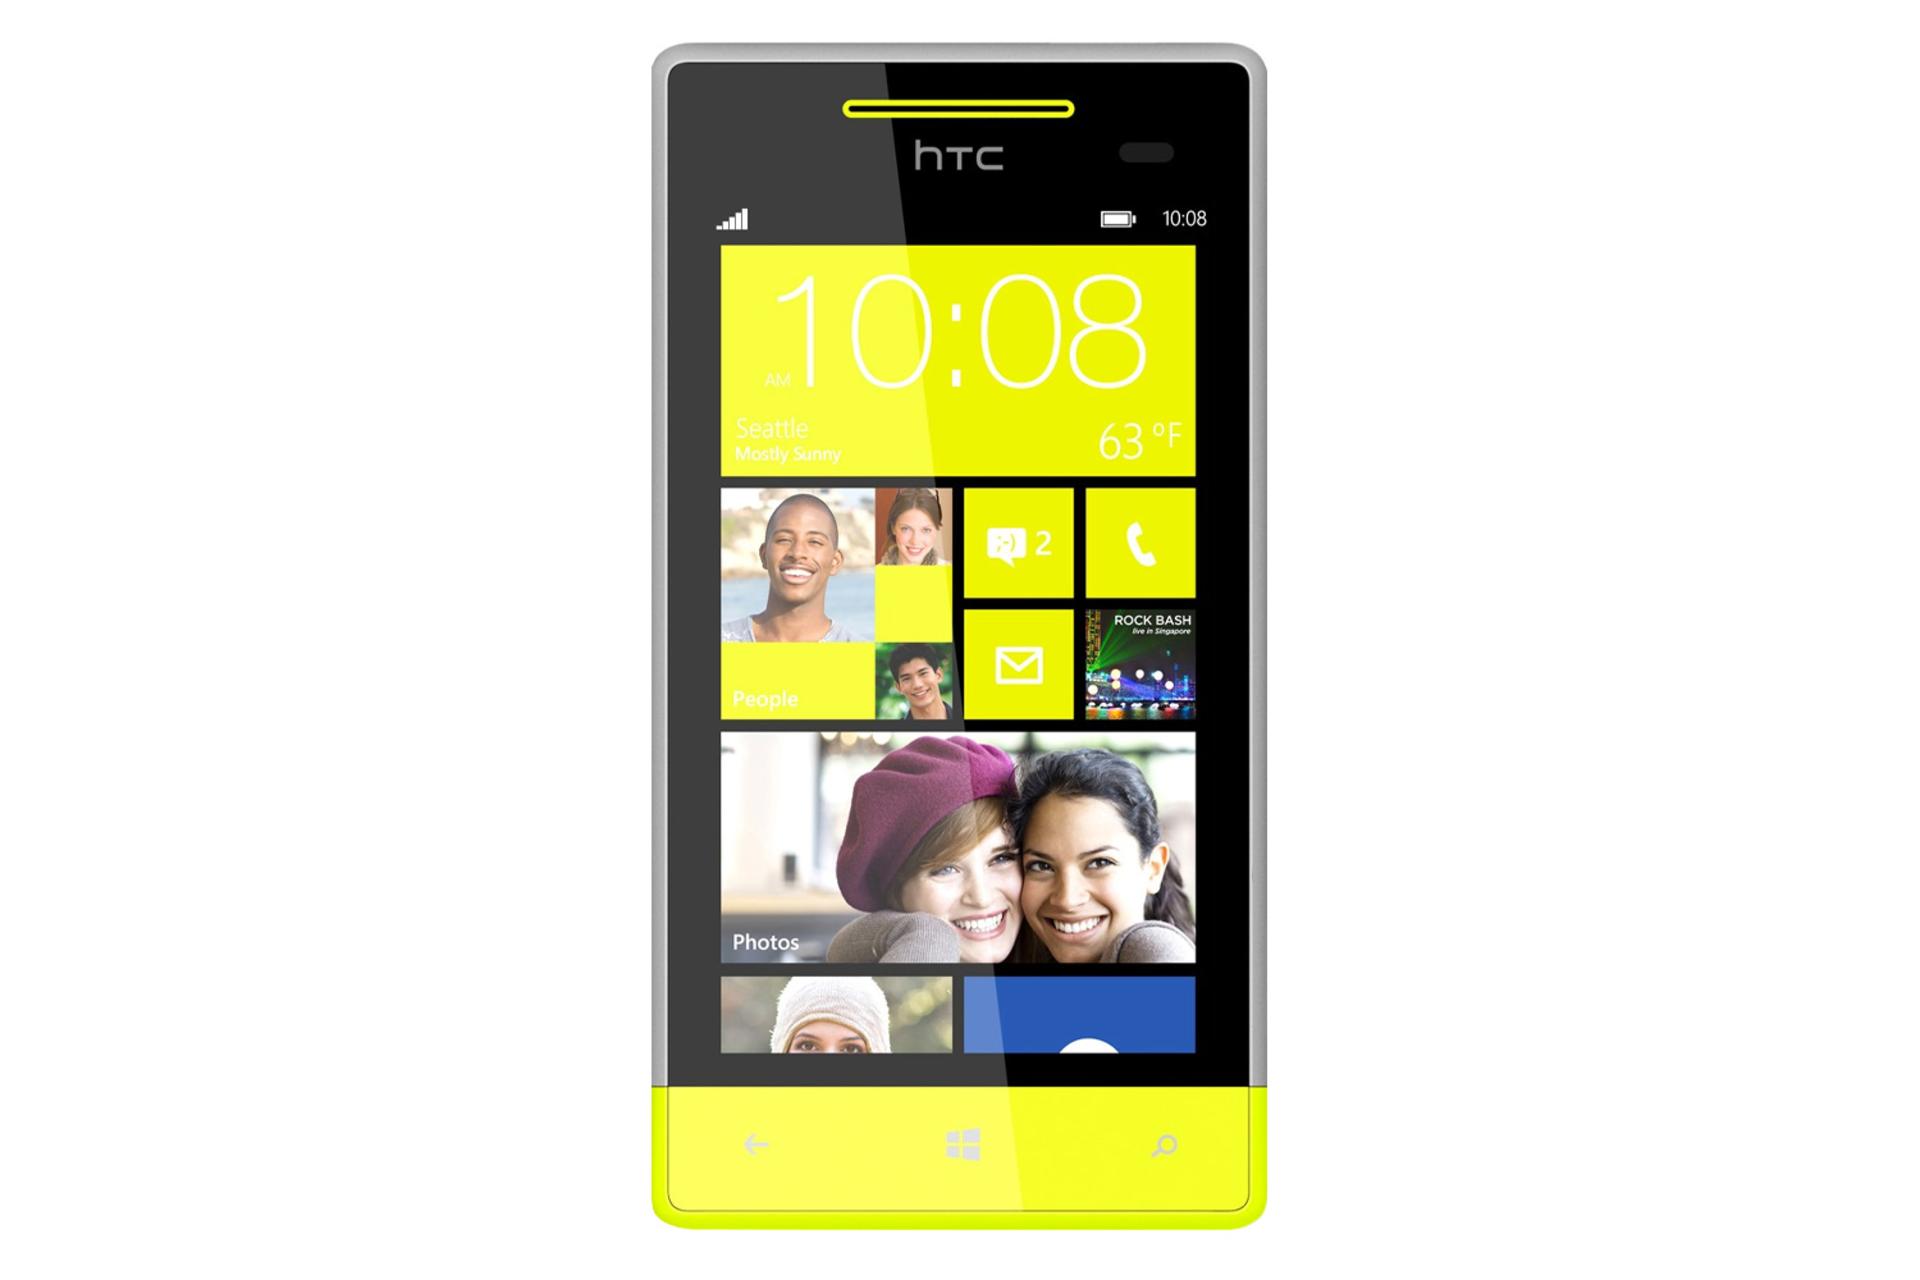 نمایشگر ویندوز فون 8S اچ تی سی HTC Windows Phone 8S